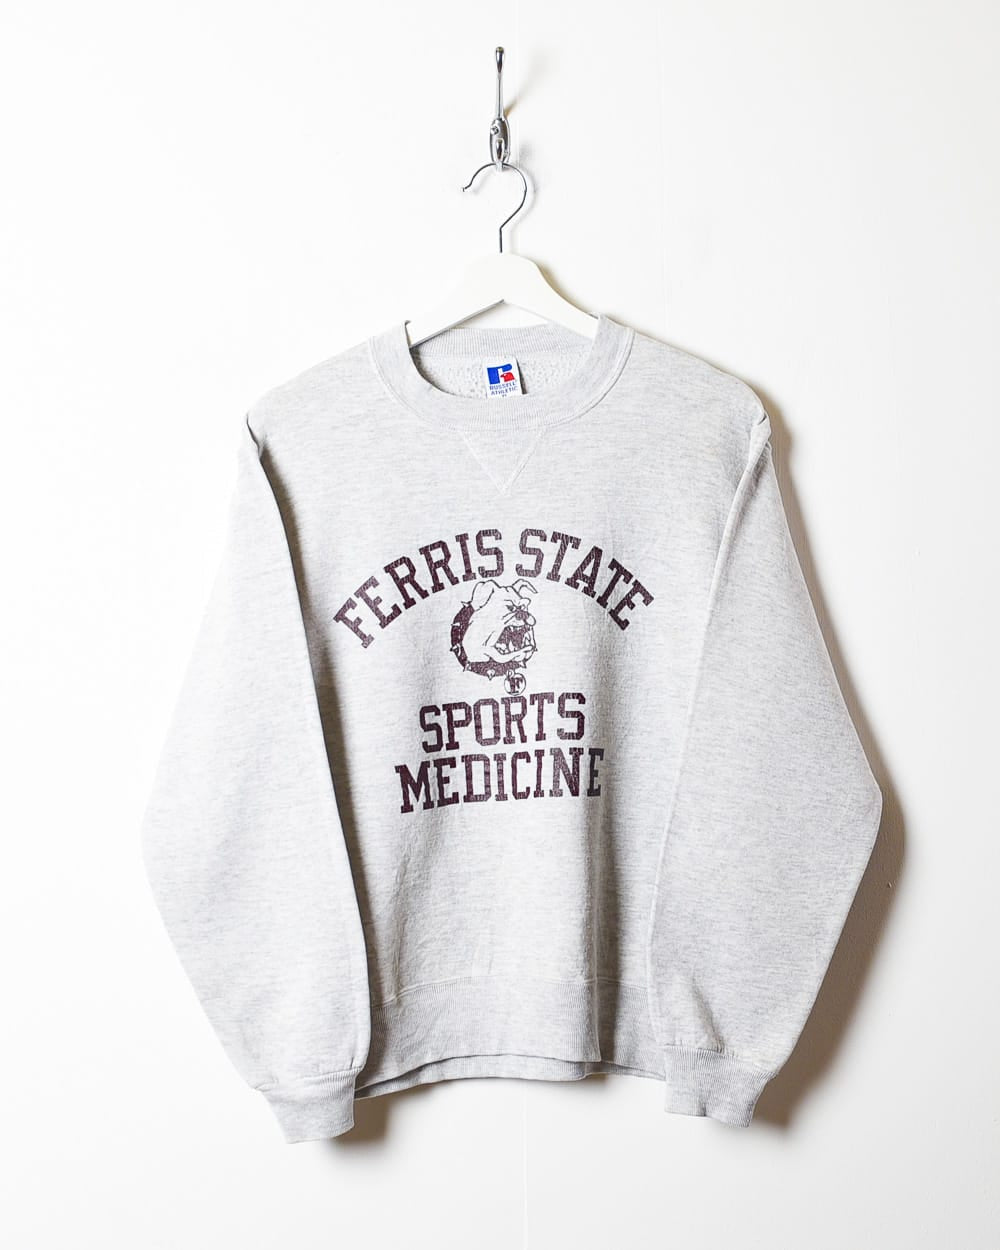 Stone Russell Athletic Ferris State Sports Medicine Sweatshirt - X-Small